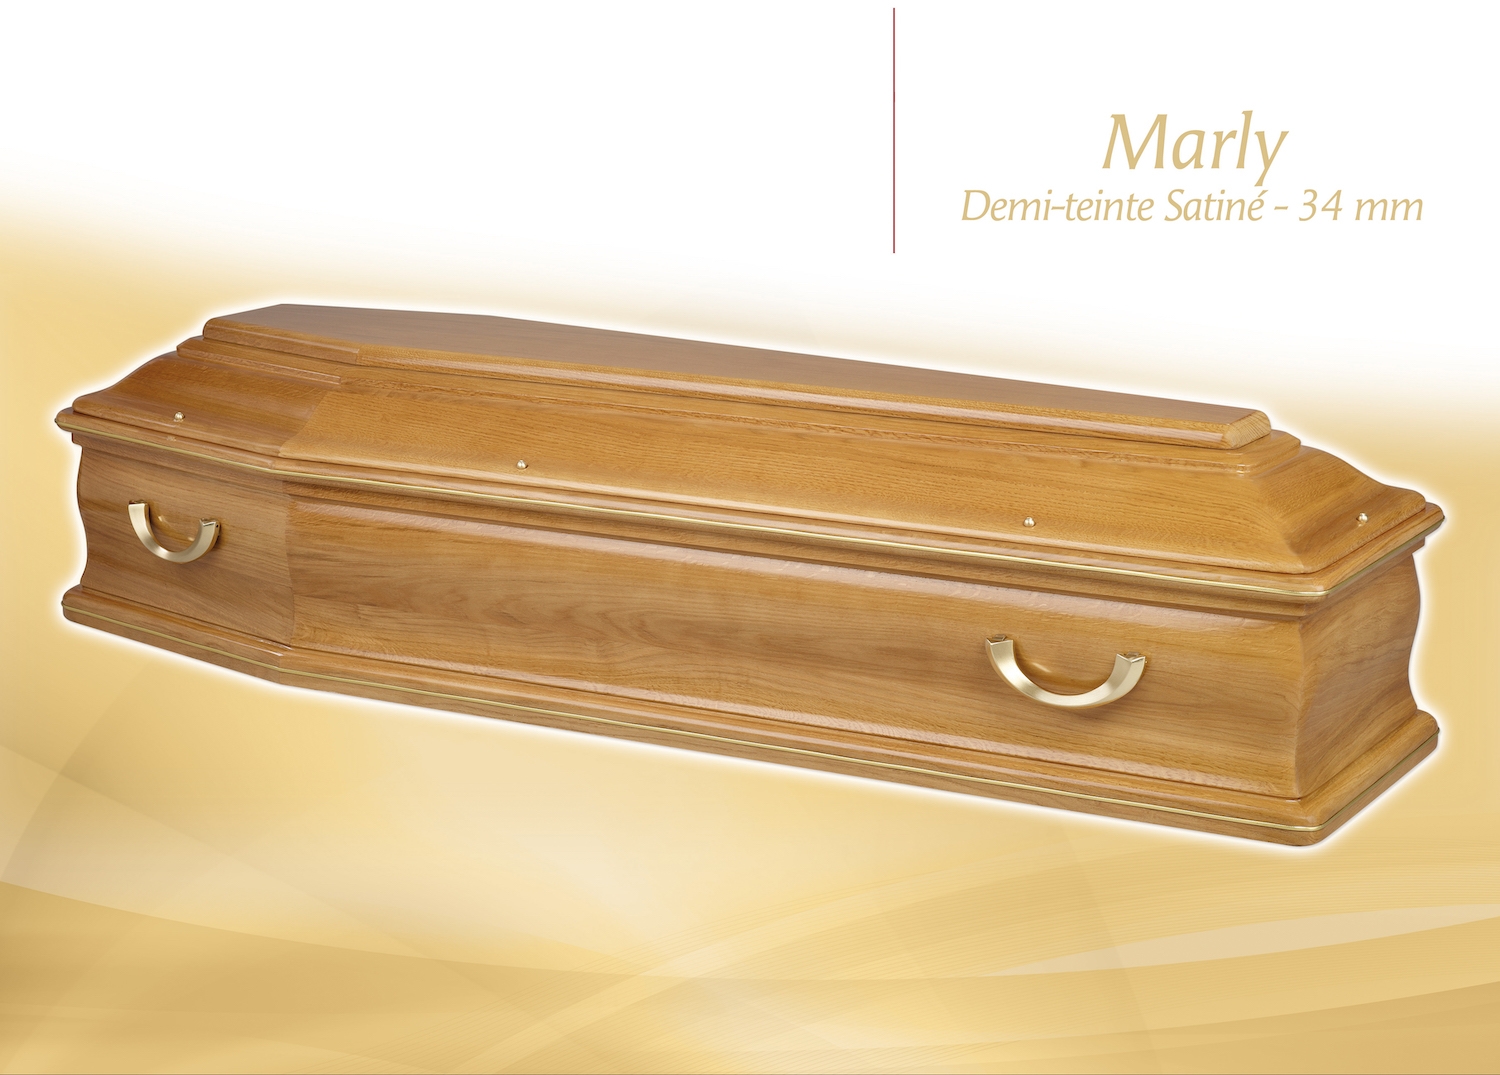 Cercueil Marly demi teinte satine 34 mm